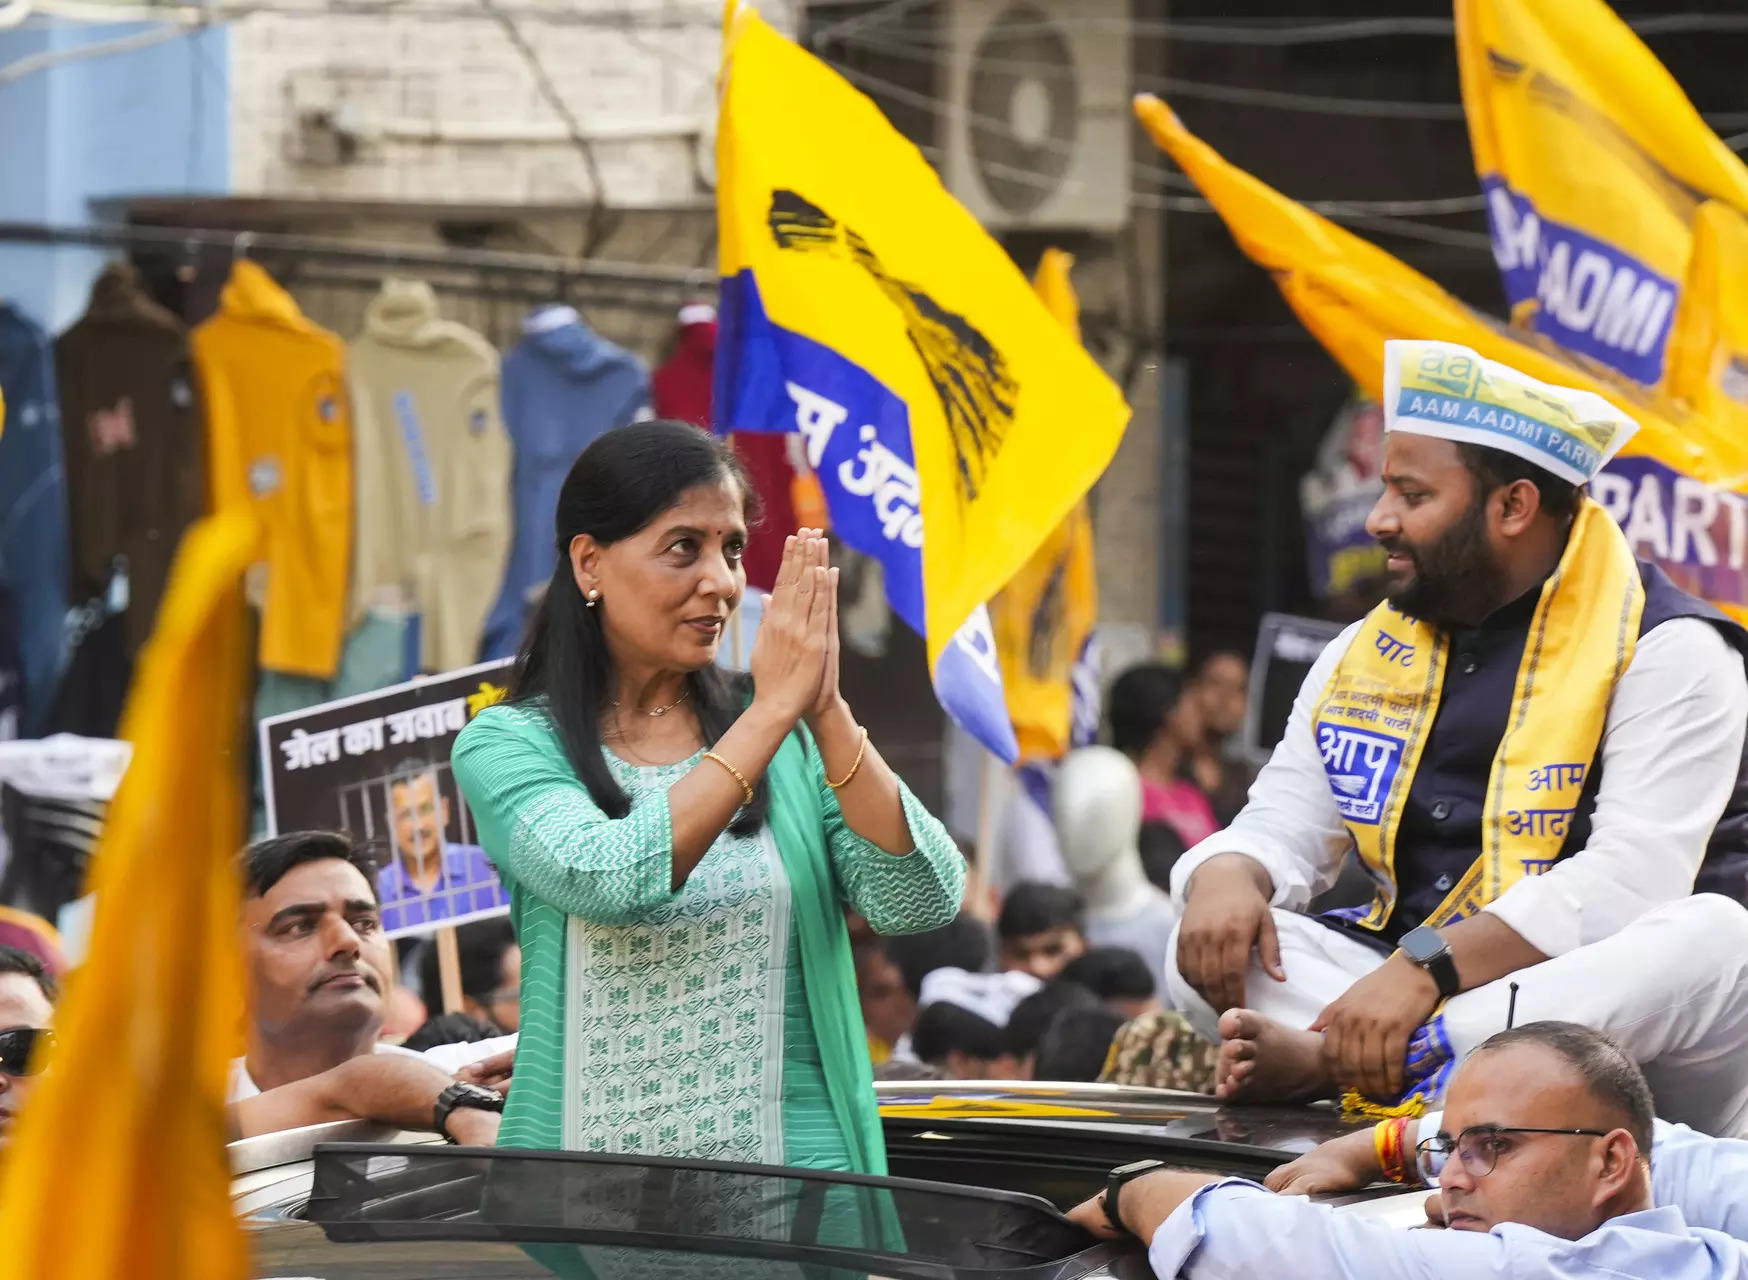 CM jailed before polls to stifle his voice: Sunita Kejriwal calls for vote against 'dictatorship' 